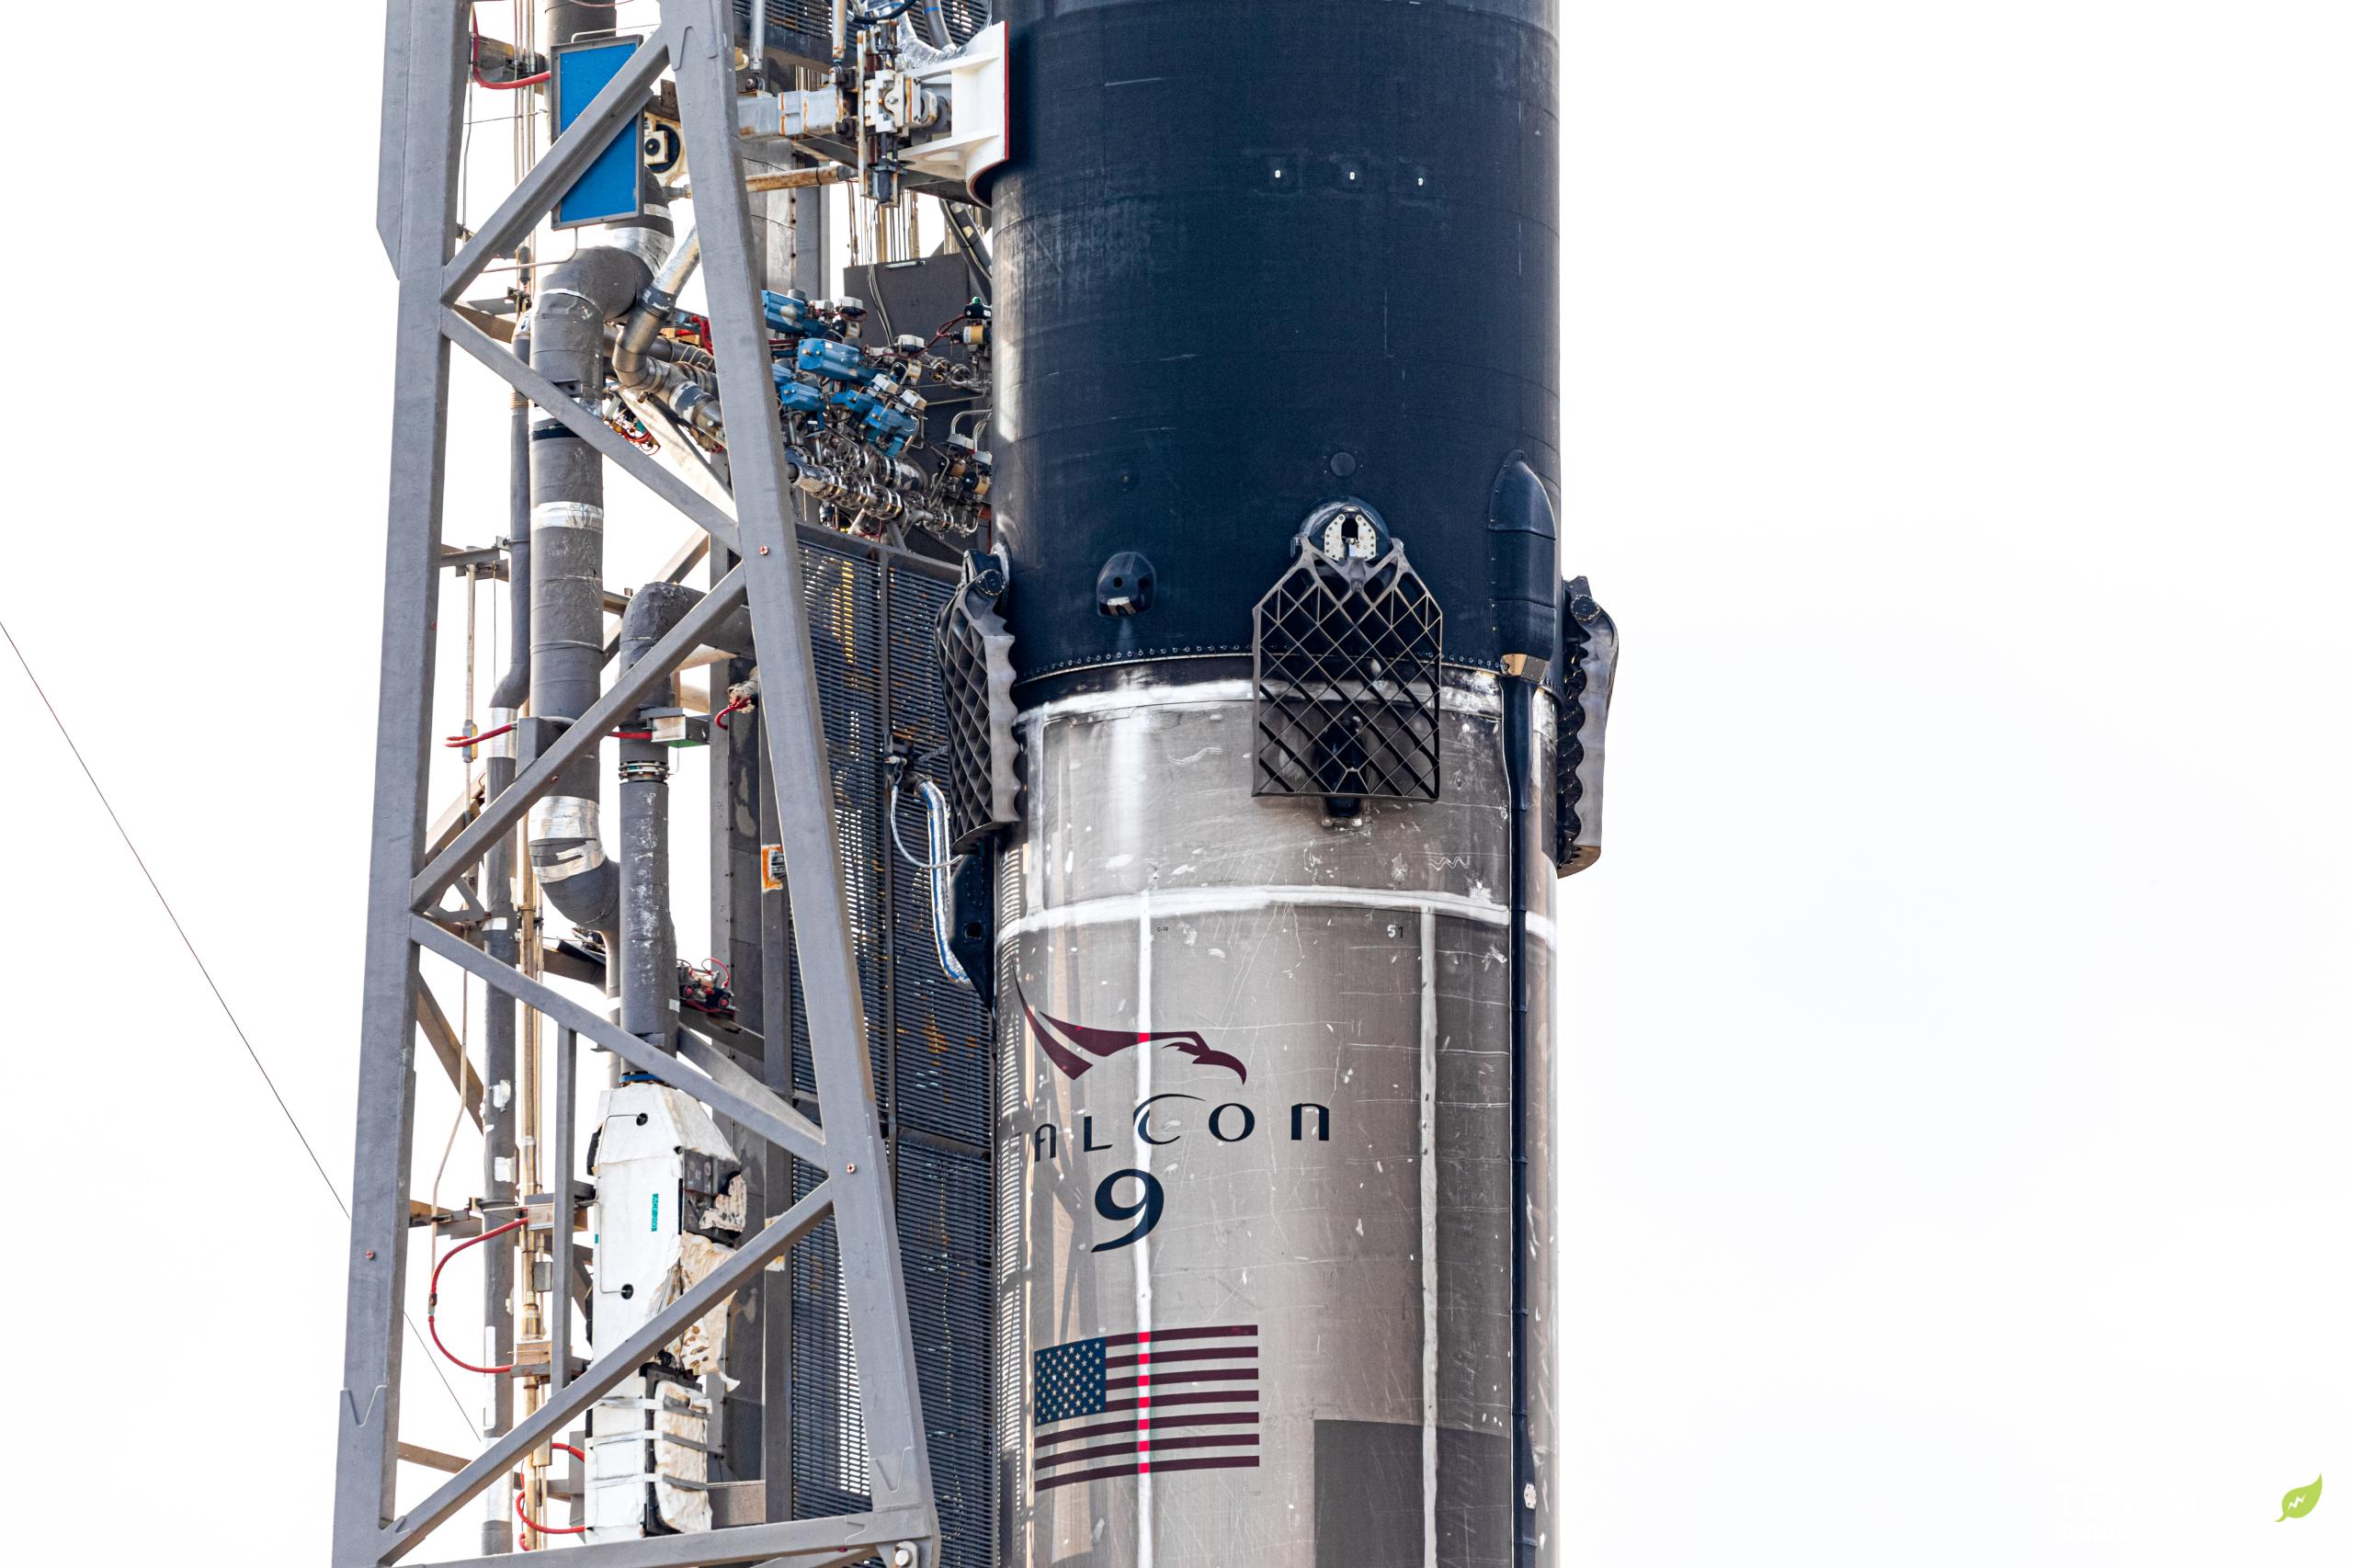 SXM-7 Falcon 9 B1051 LC-40 121220 (Richard Angle) vertical (4)